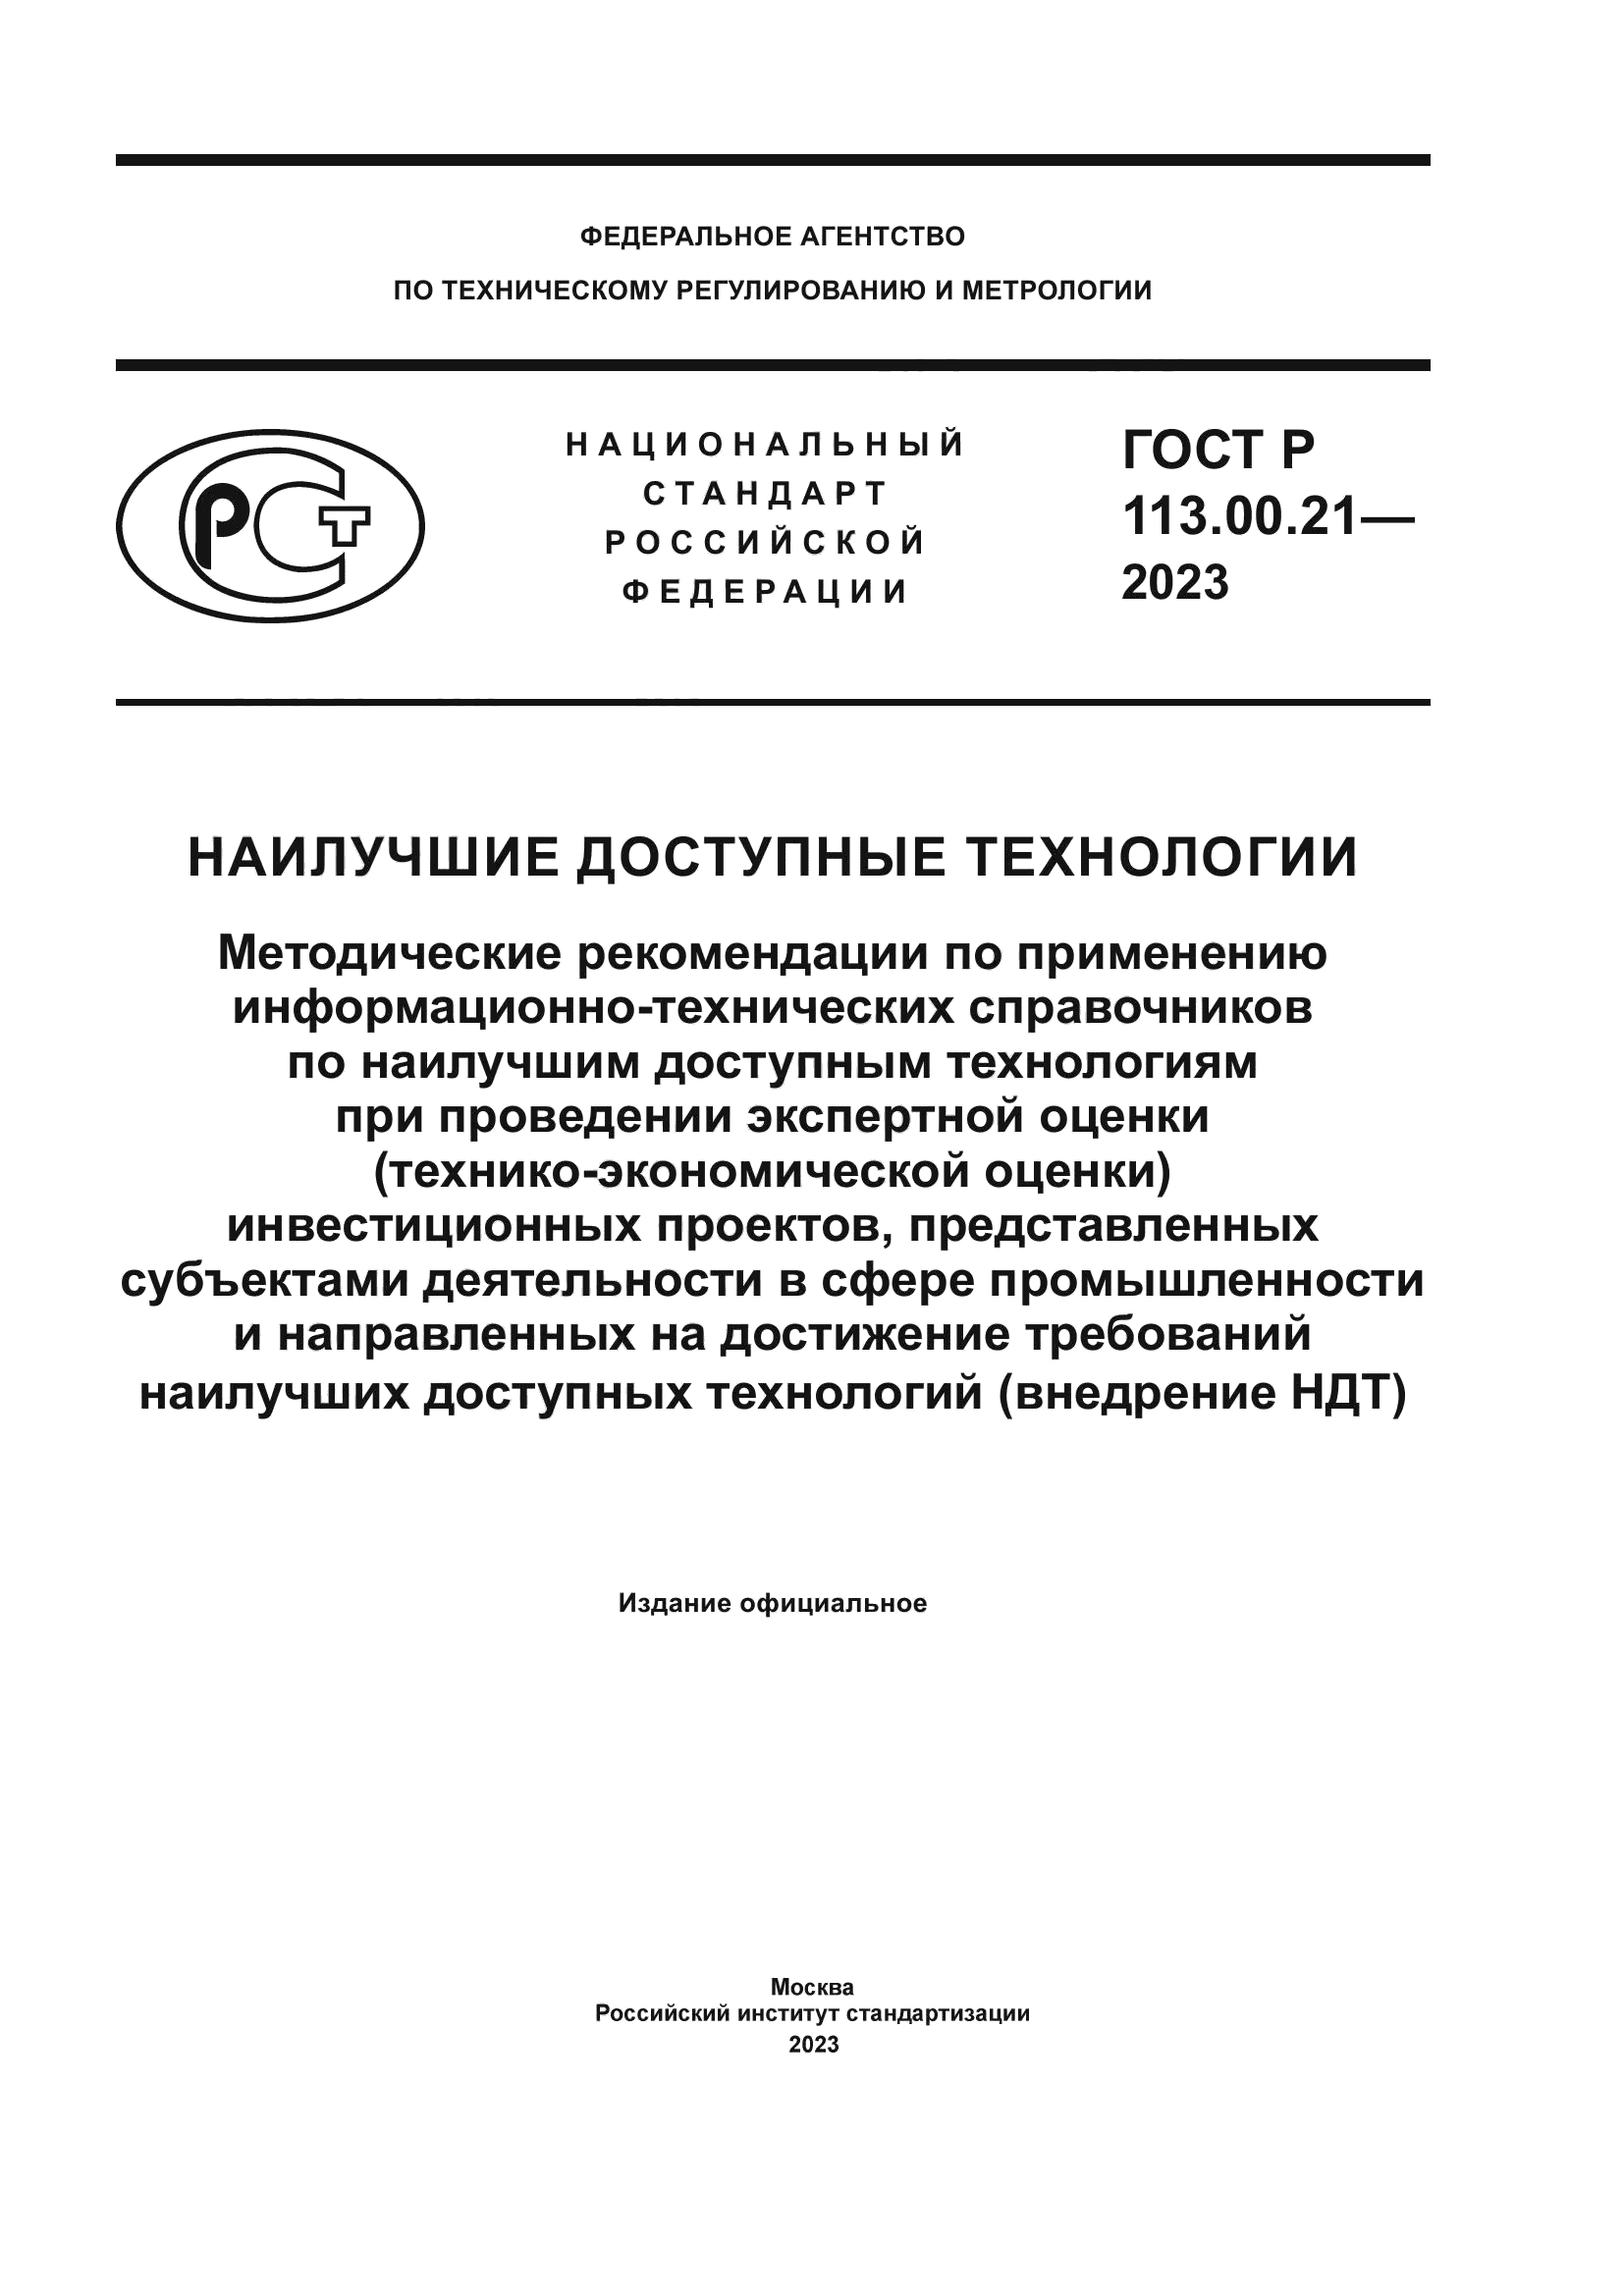 ГОСТ Р 113.00.21-2023